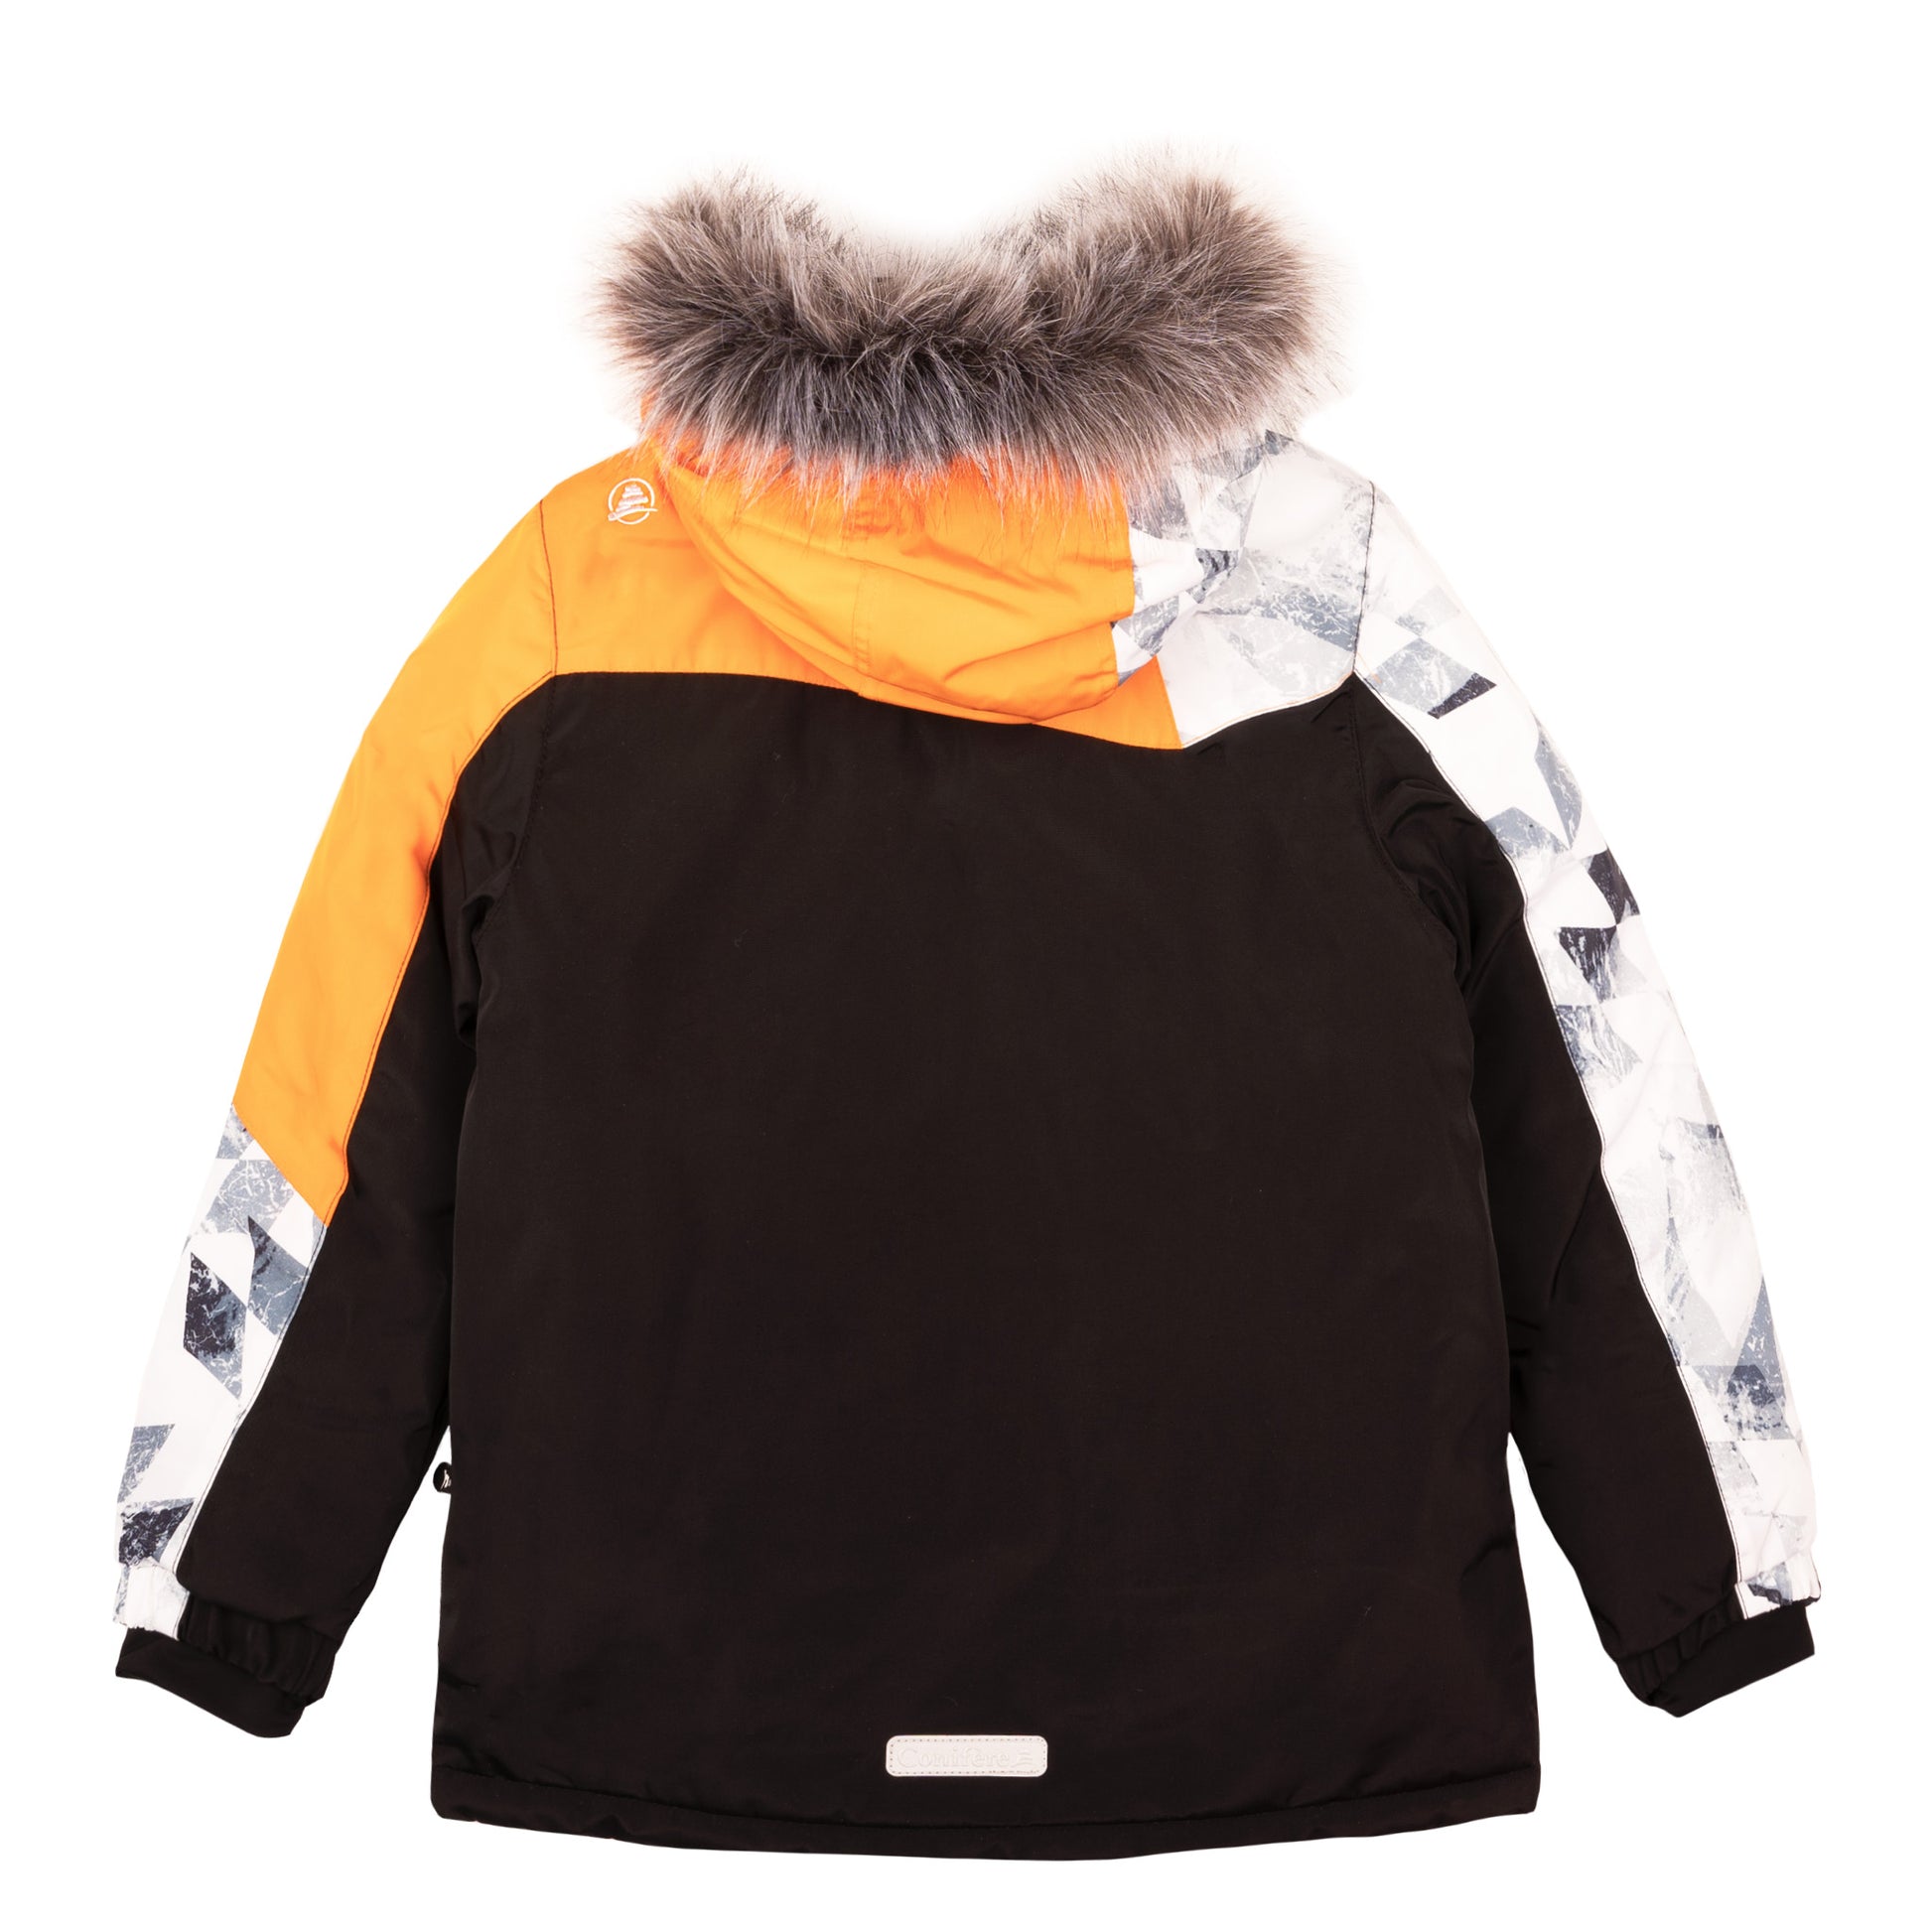 OBO - Boys Black/Orange Snowsuit Set